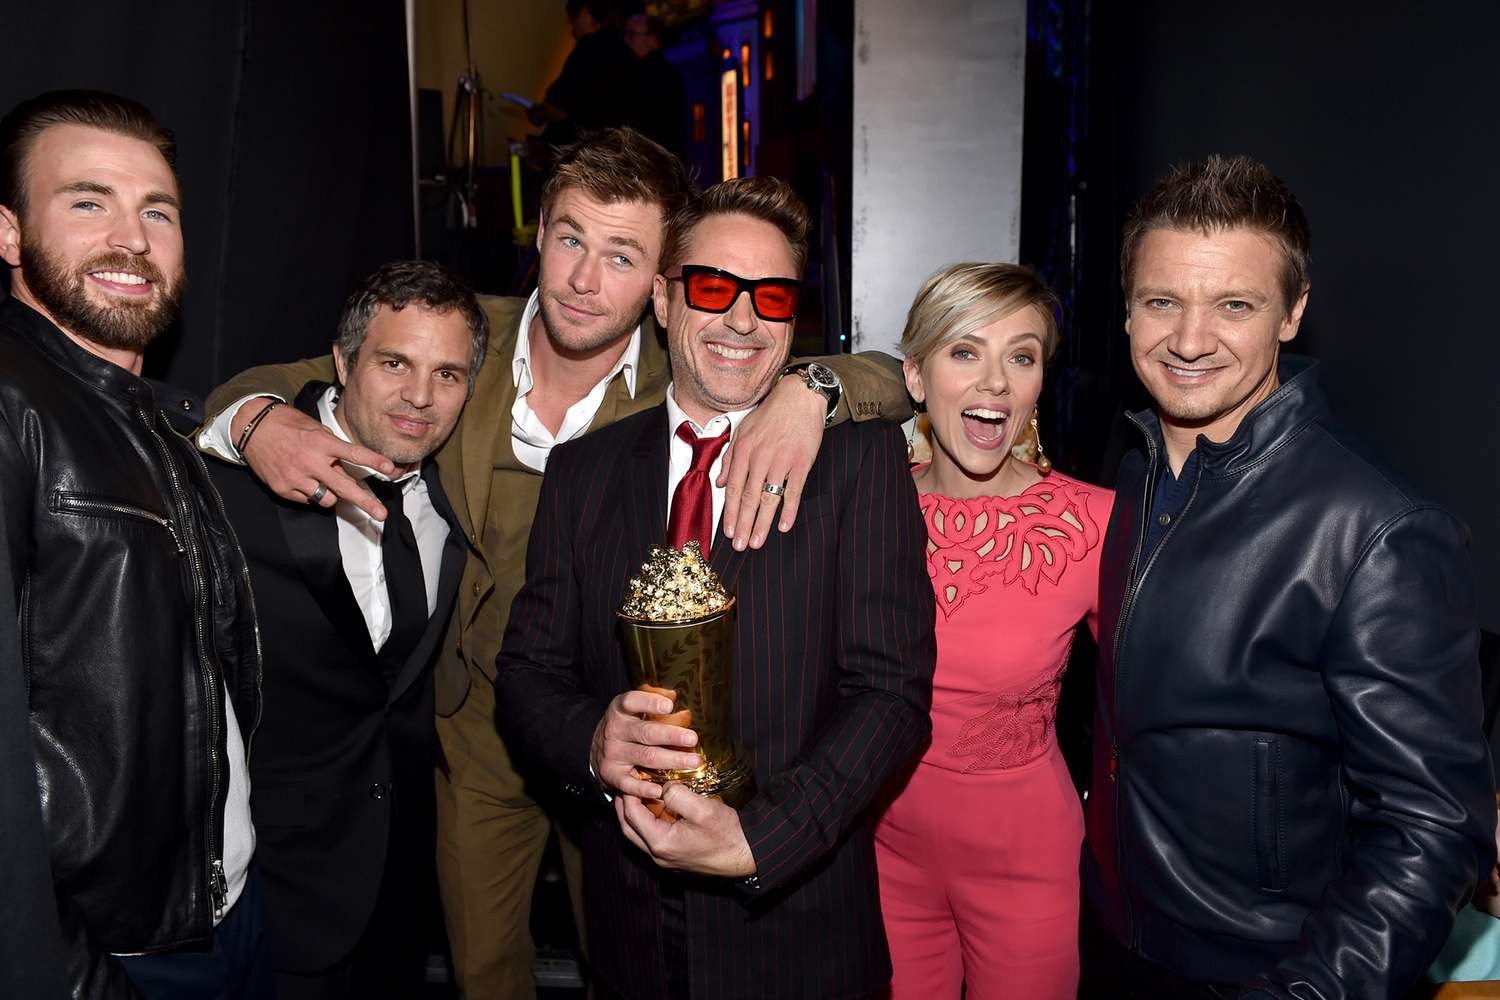 The Avengers star cast